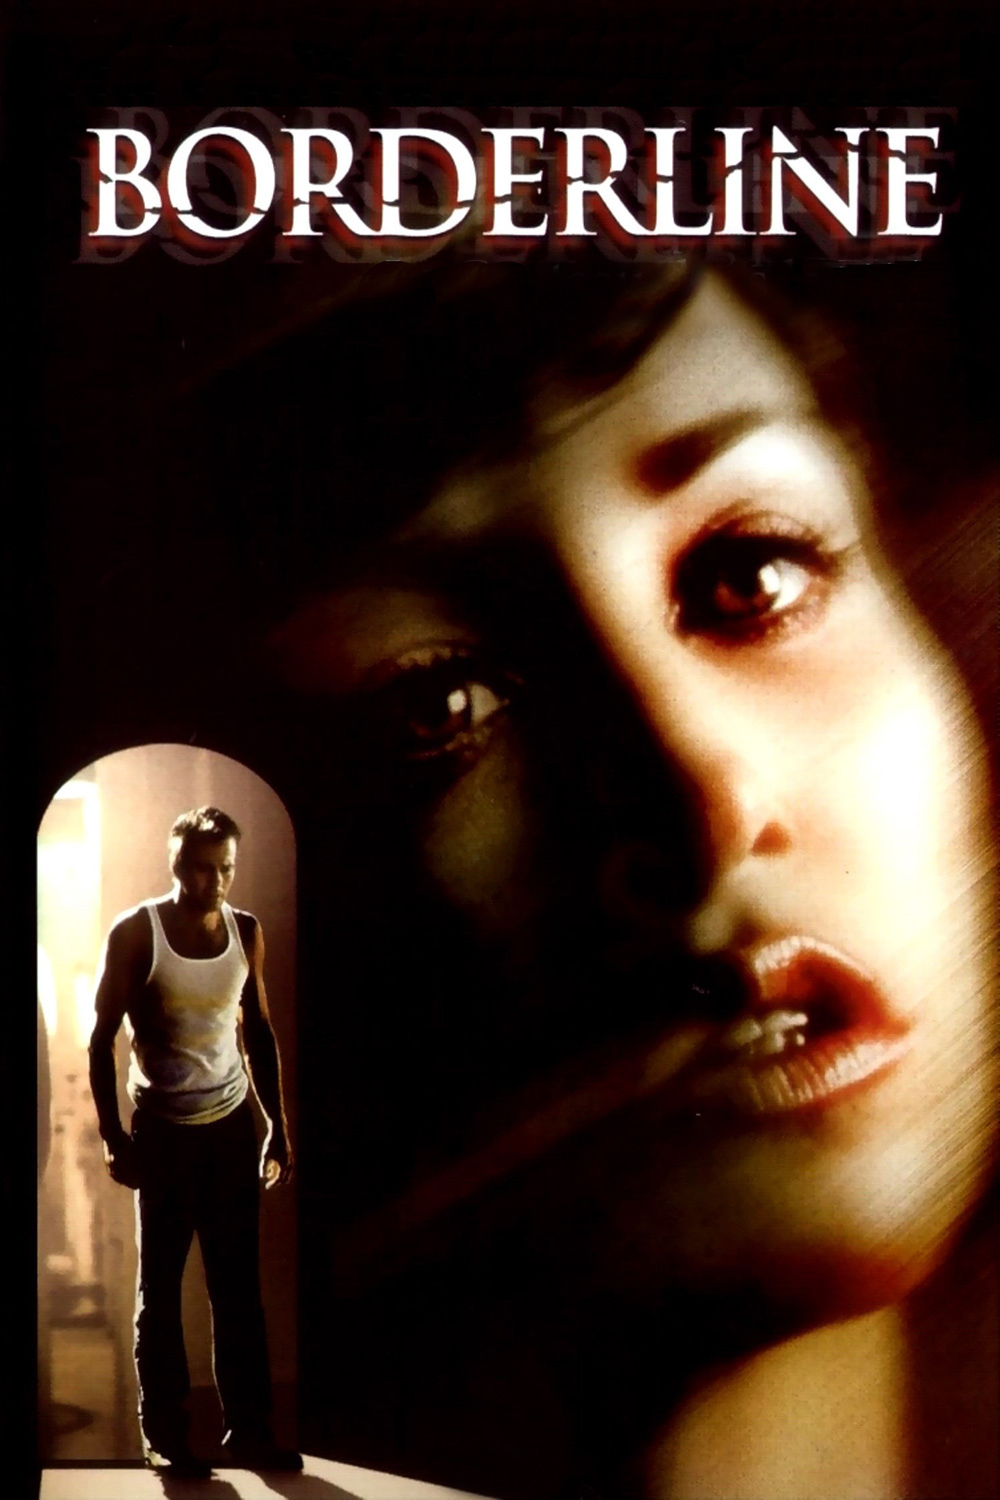 Poster for the movie "Borderline"